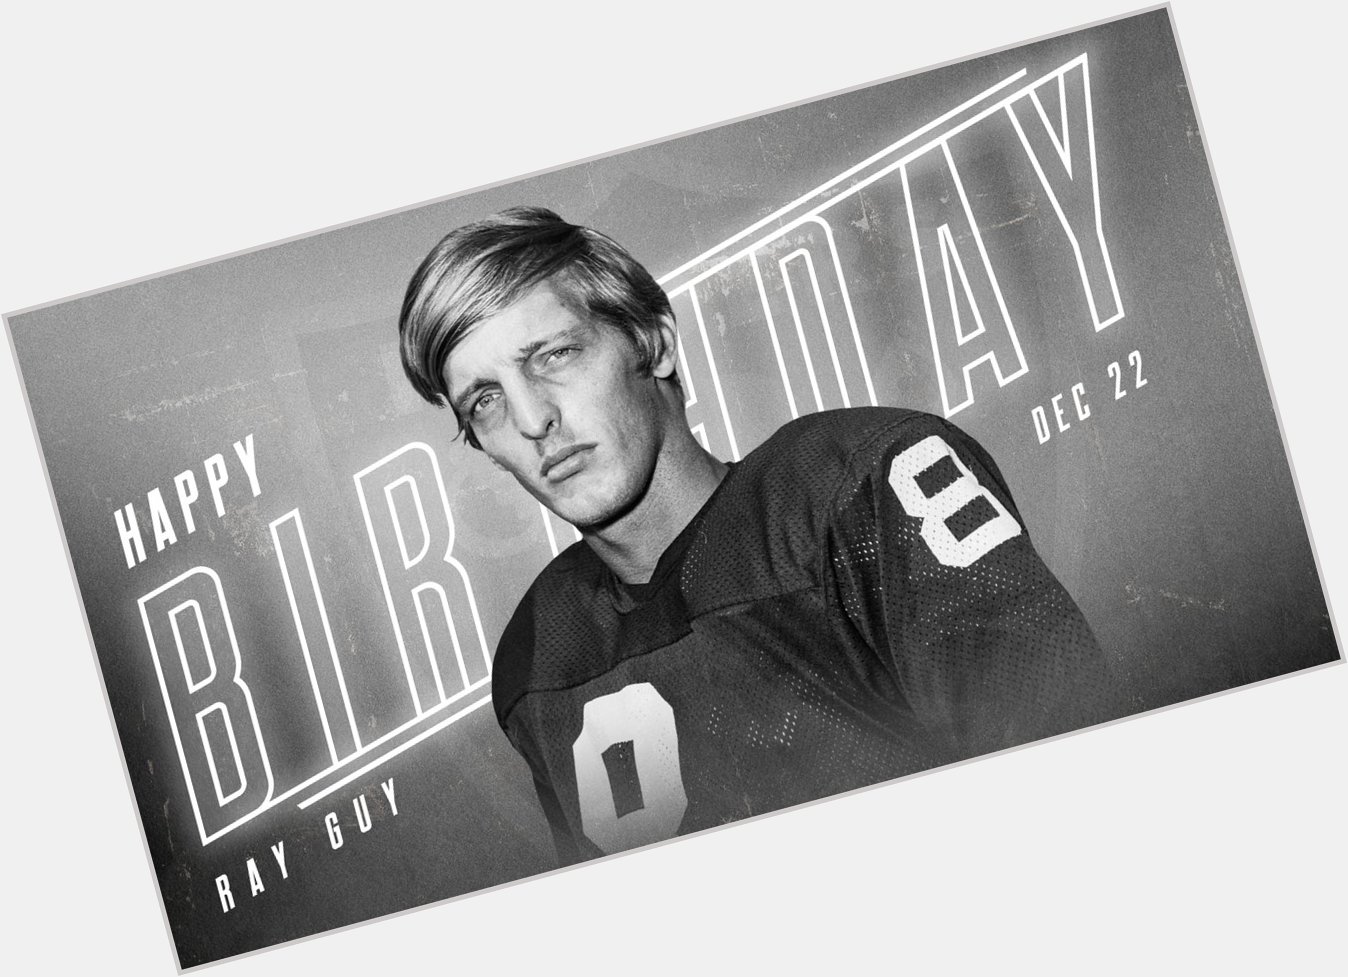 Happy birthday to Hall of Famer, Ray Guy 